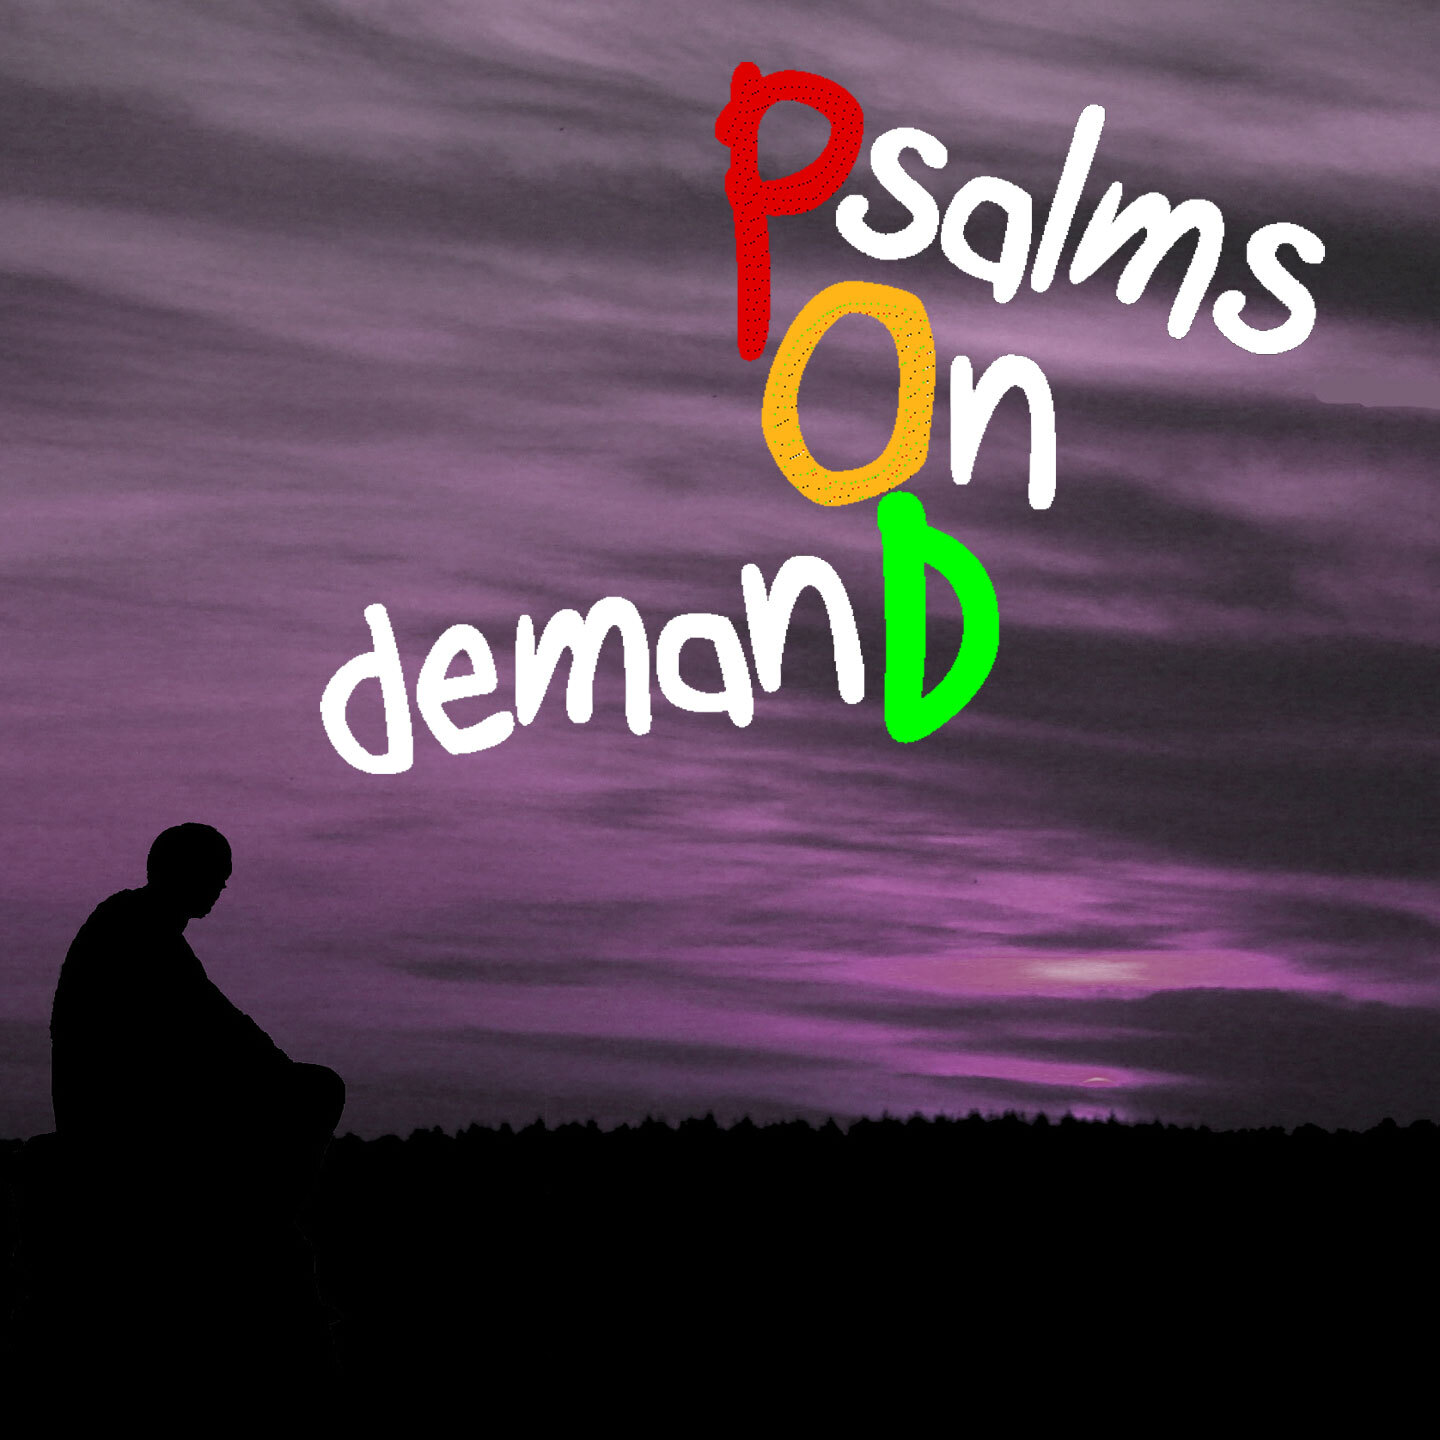 Psalm On Demand - Psalm 90